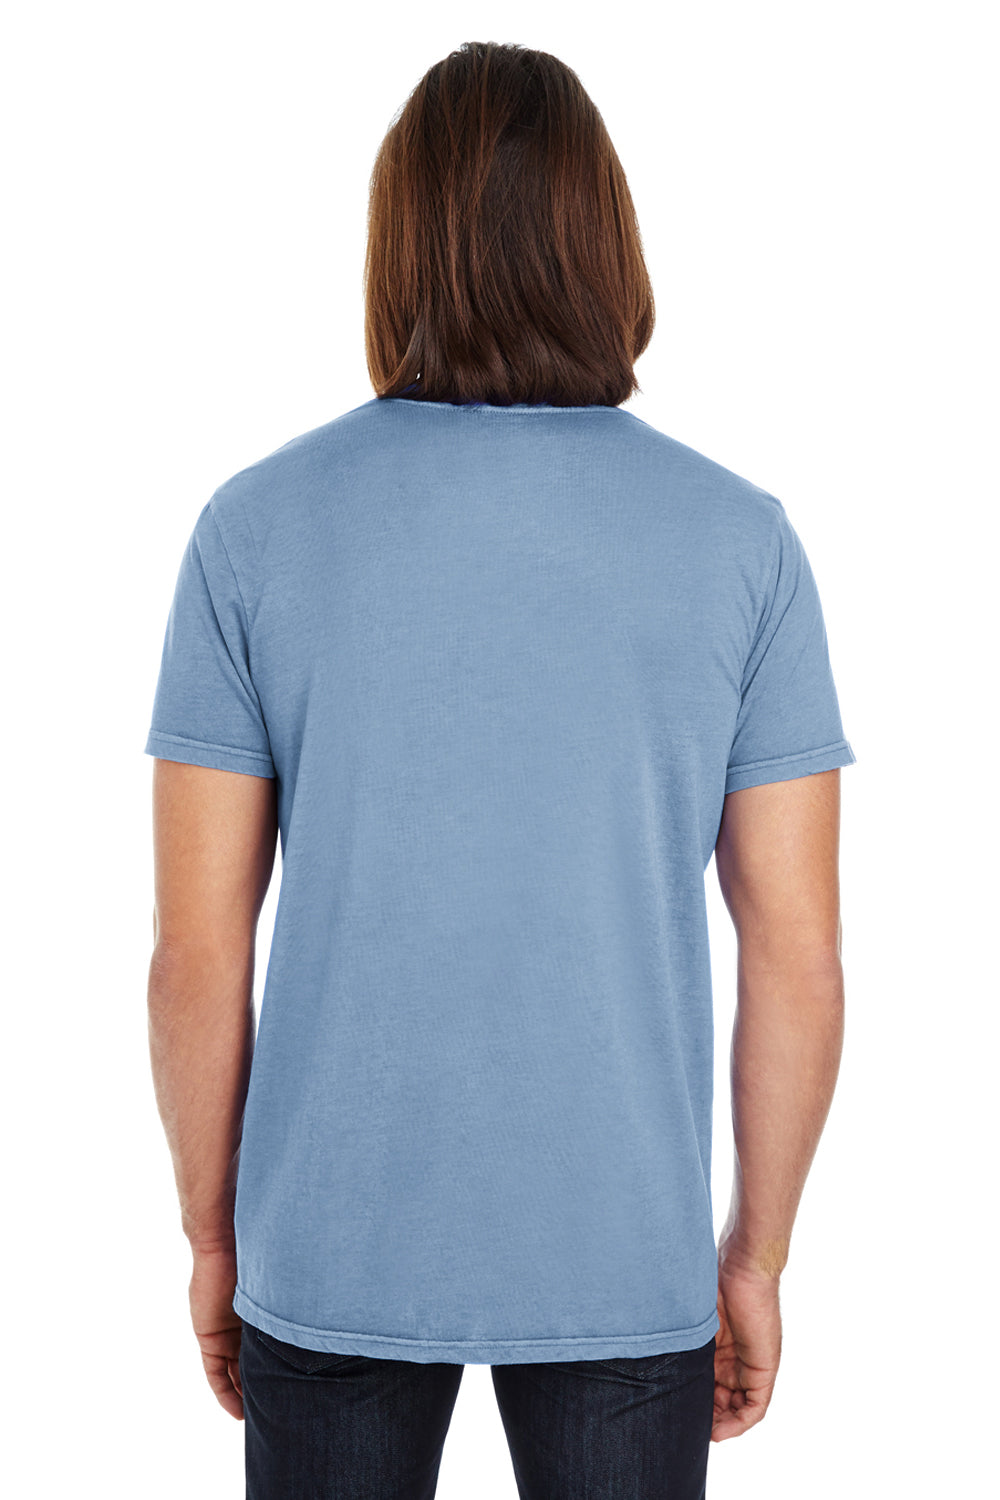 Threadfast Apparel 130A Mens Short Sleeve Crewneck T-Shirt Denim Blue Back